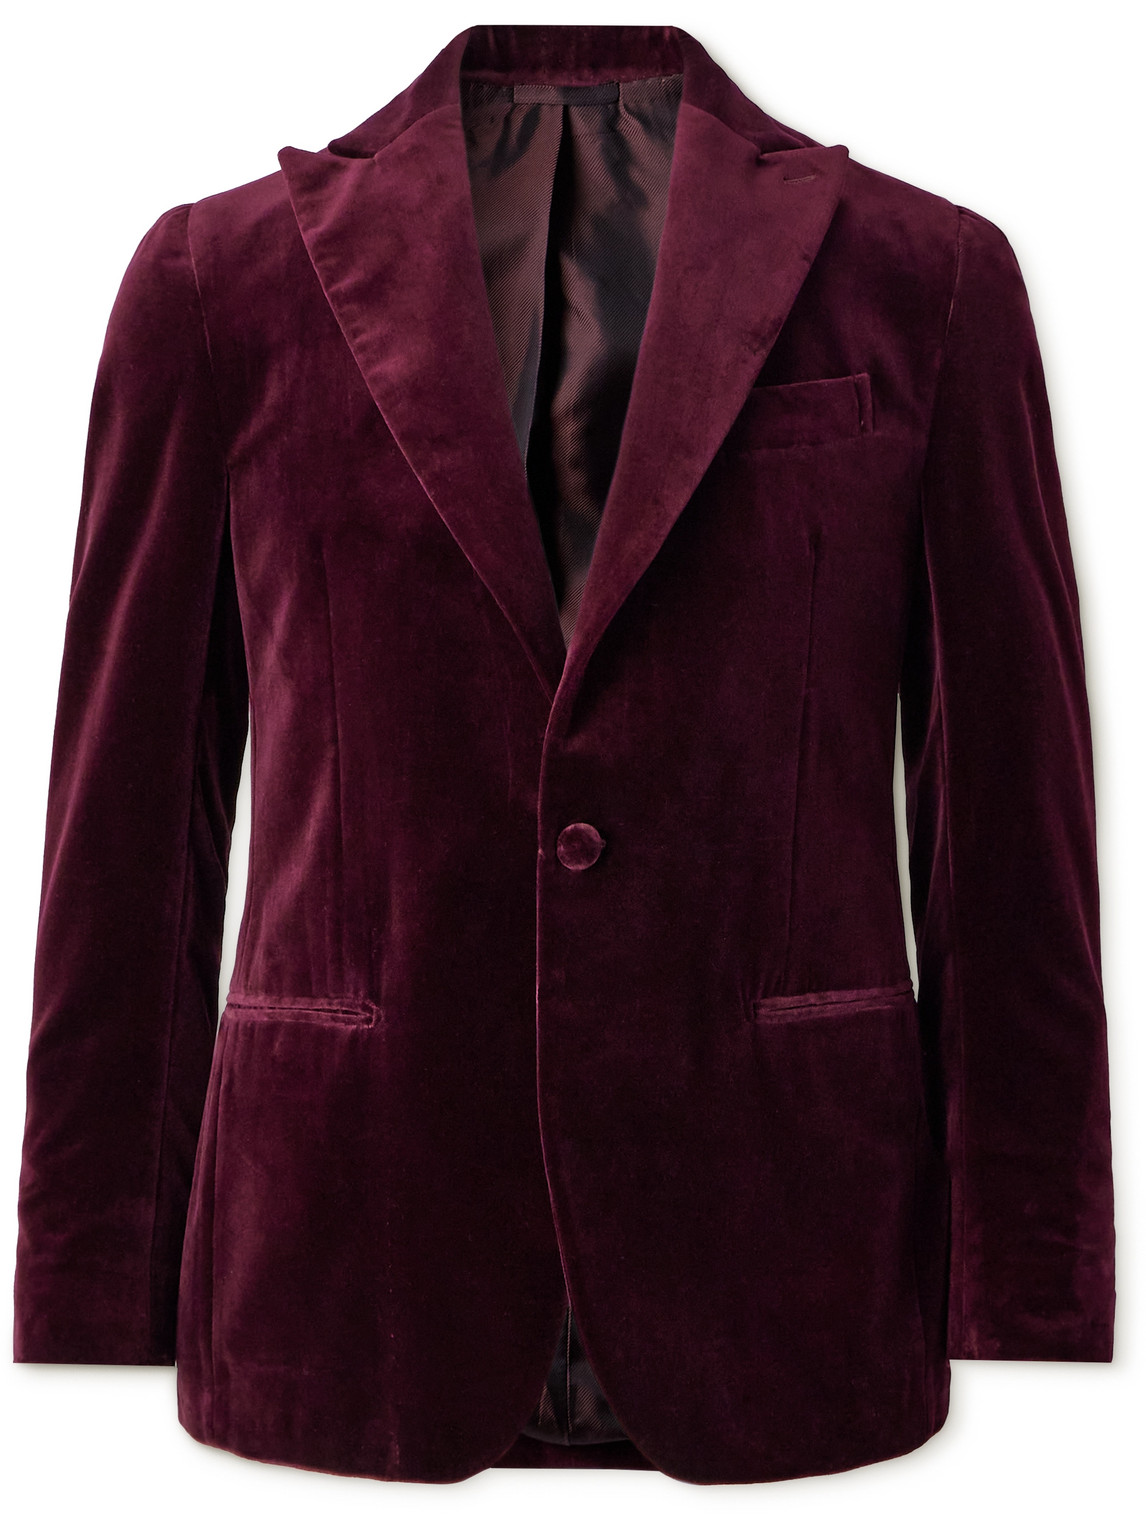 Bovio Cotton-Velvet Tuxedo Jacket